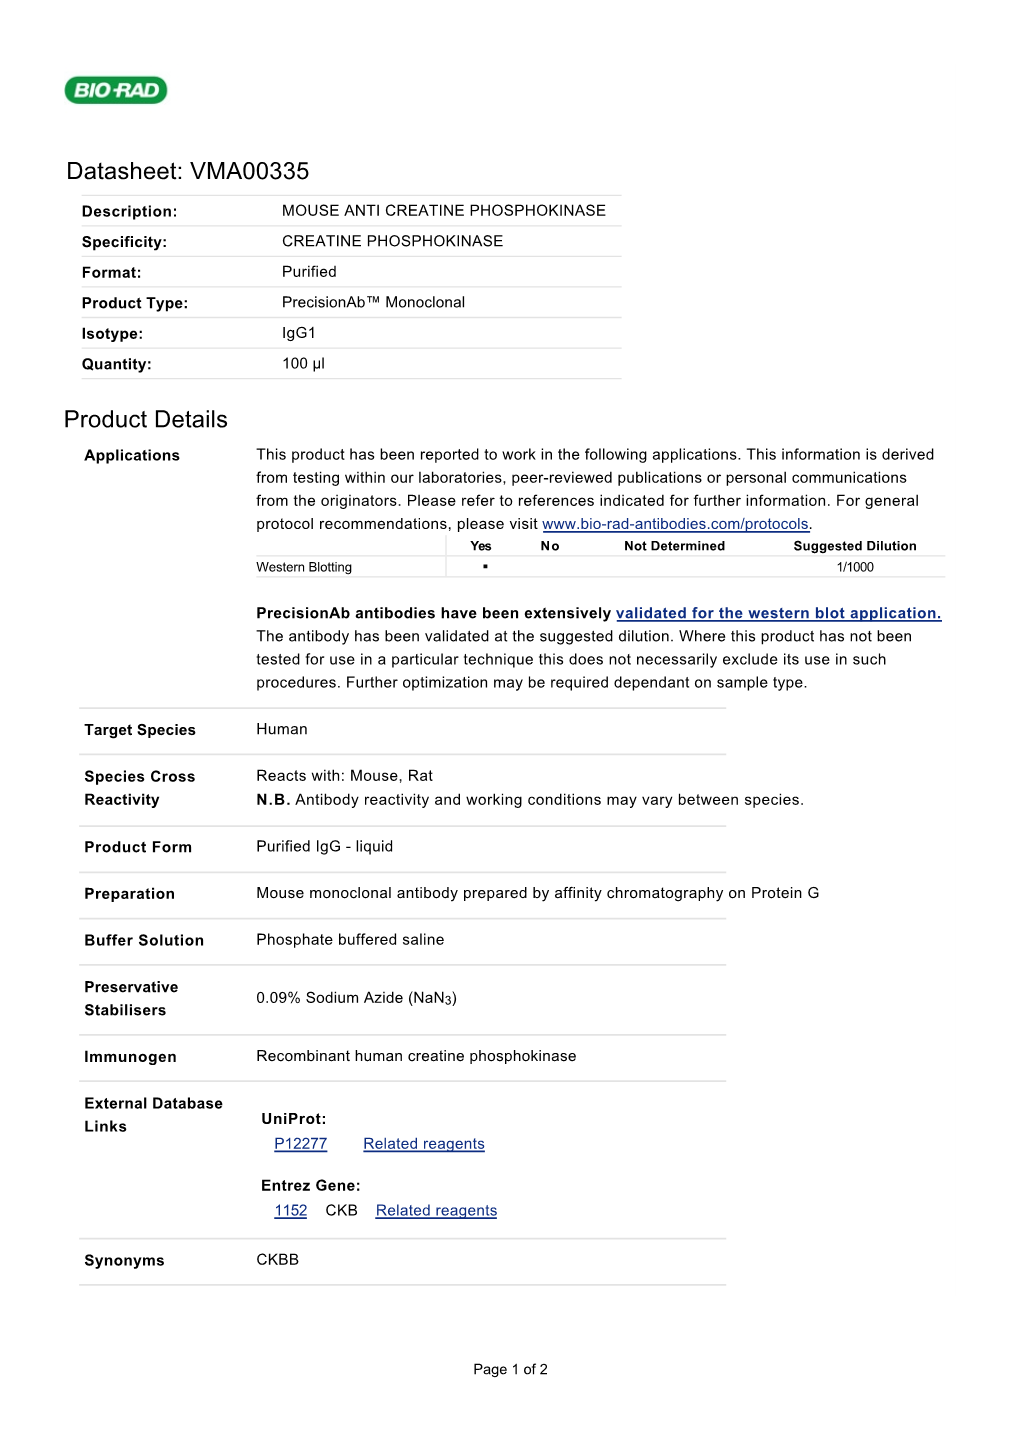 Datasheet: VMA00335 Product Details